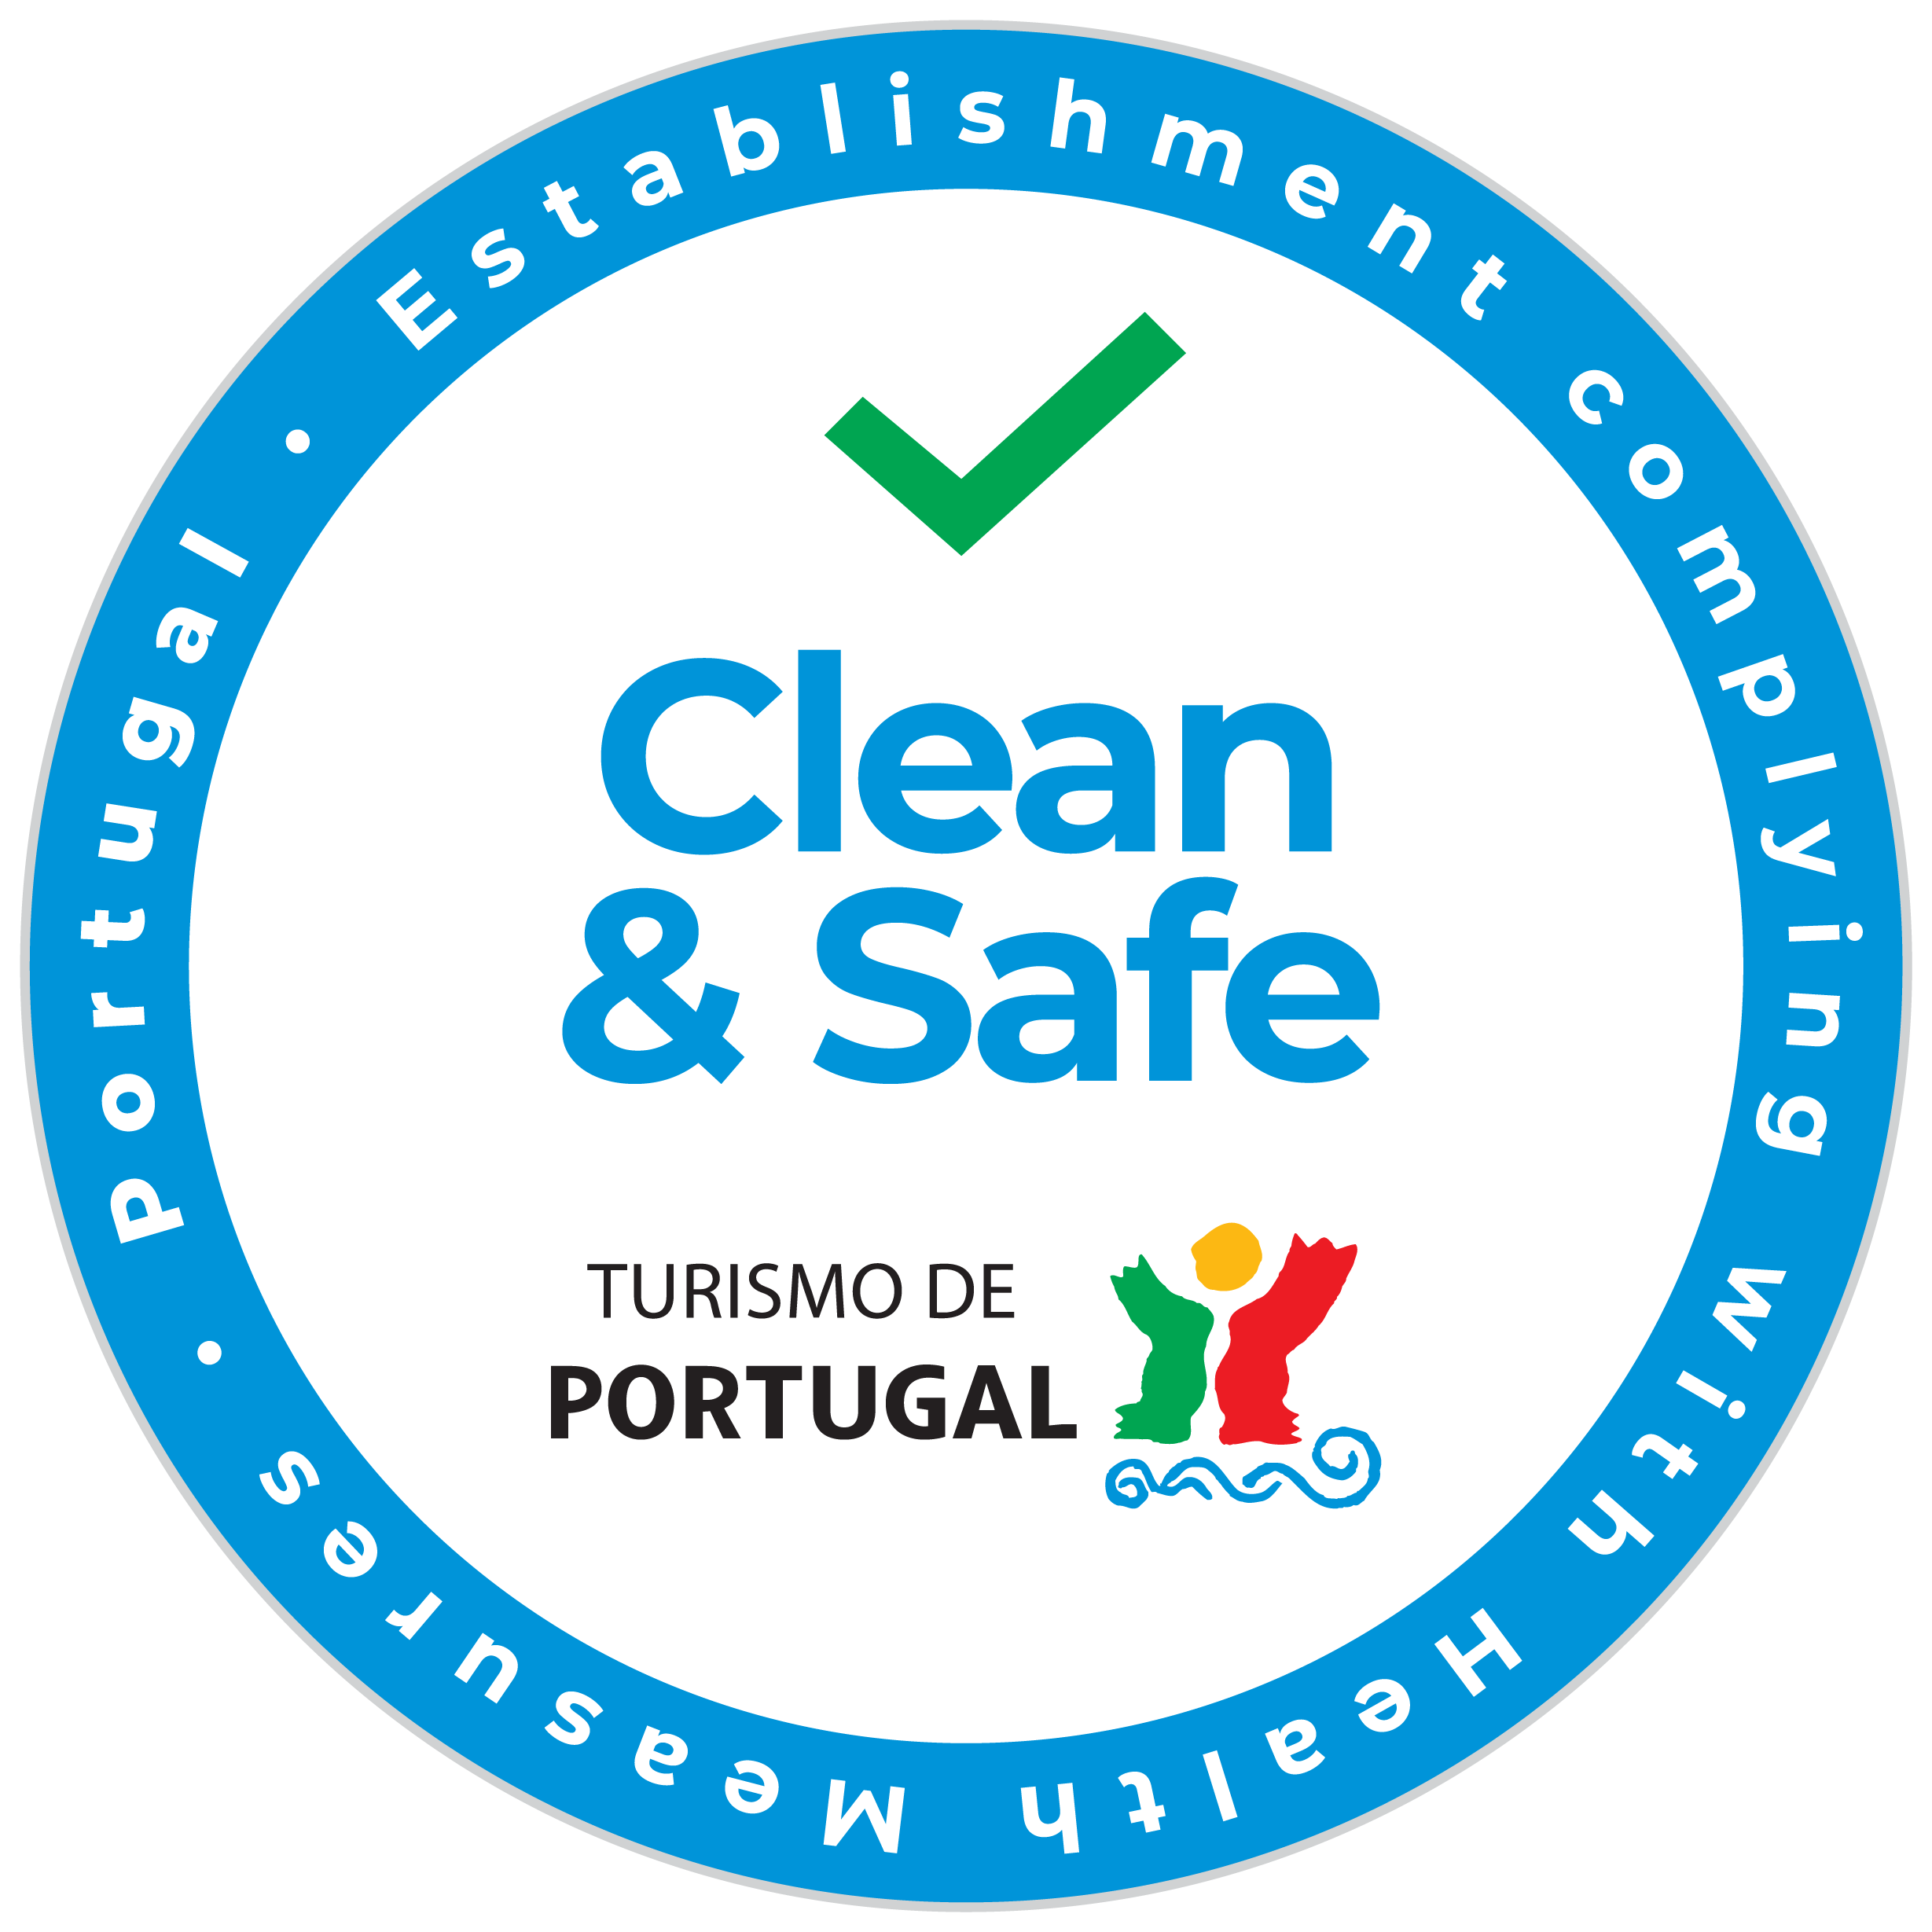 Clean & Safe | www.visitportugal.com